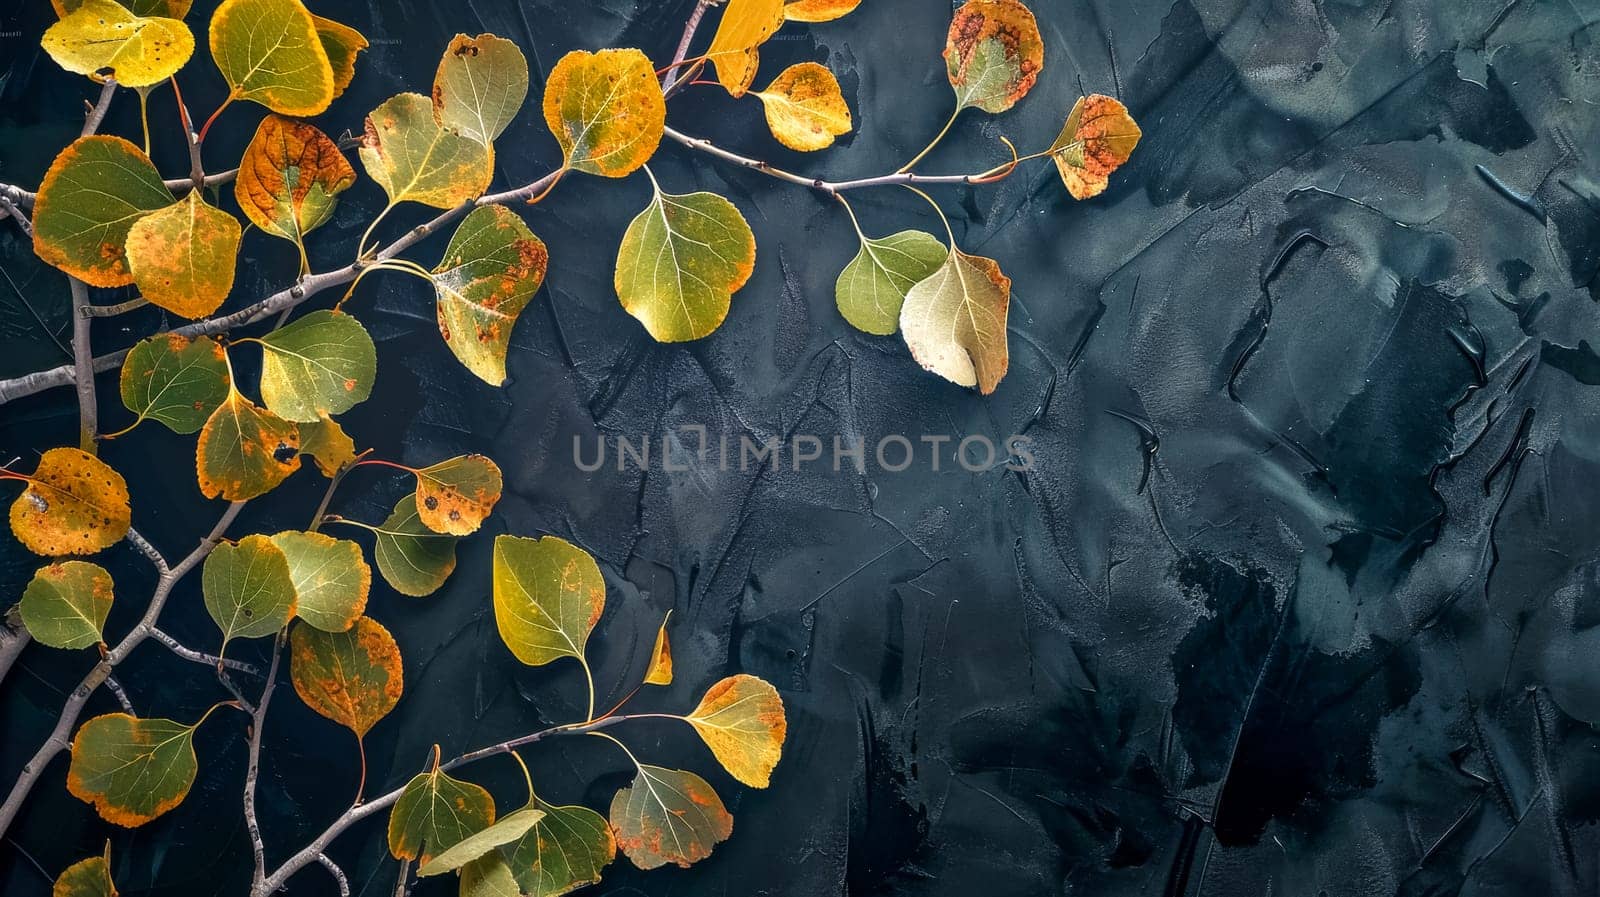 Autumn leaves over textured dark background by Edophoto